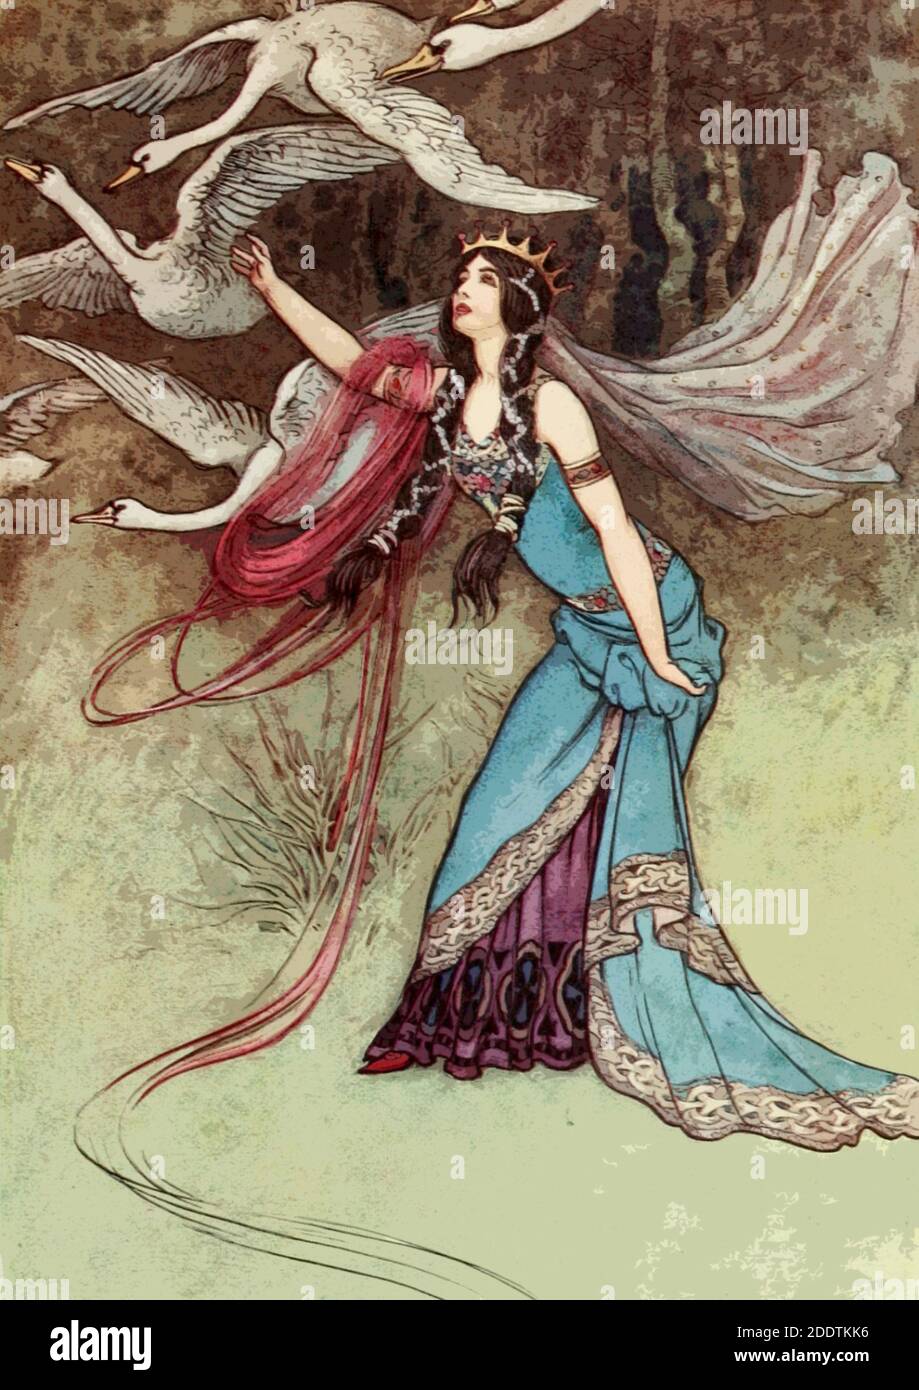 Warwick Goble - Princesse et cygnes - 1910 Banque D'Images